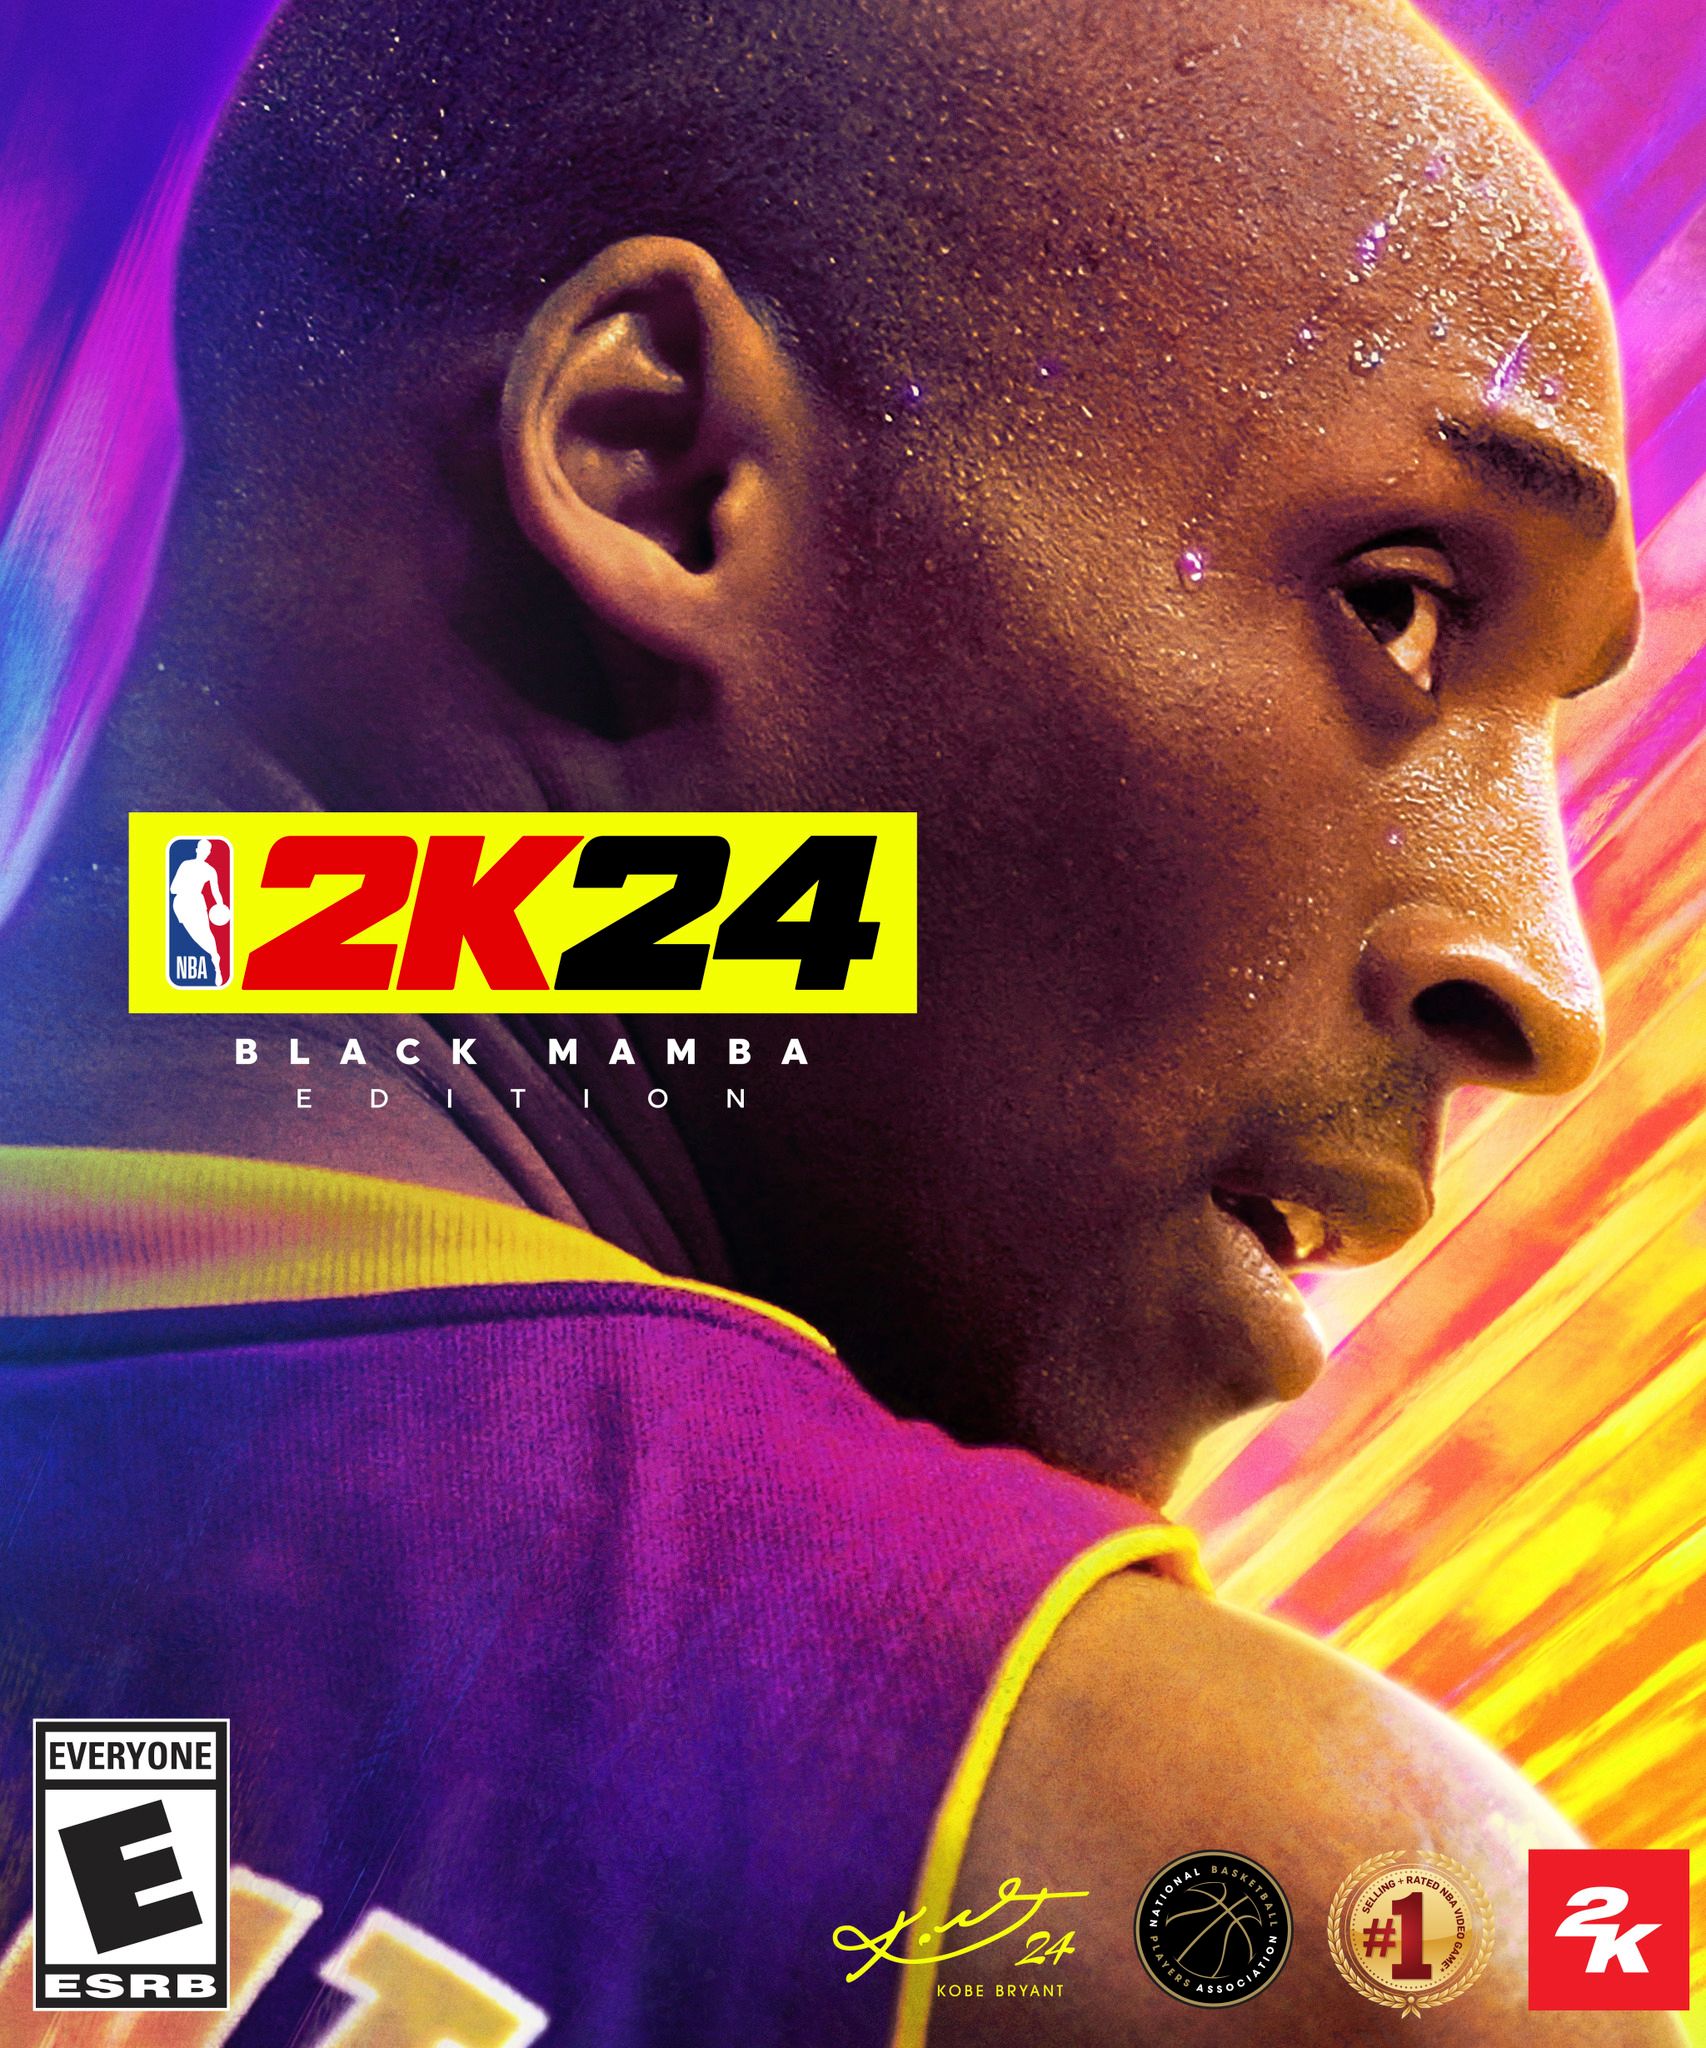 Gambar sampul dari Edisi Mamba Hitam NBA 2K24, menunjukkan Kobe Bryant mengenakan jersey tandang Lakers ungu dan melihat ke belakang bahu kanannya.  Butir-butir keringat terlihat di dahinya.